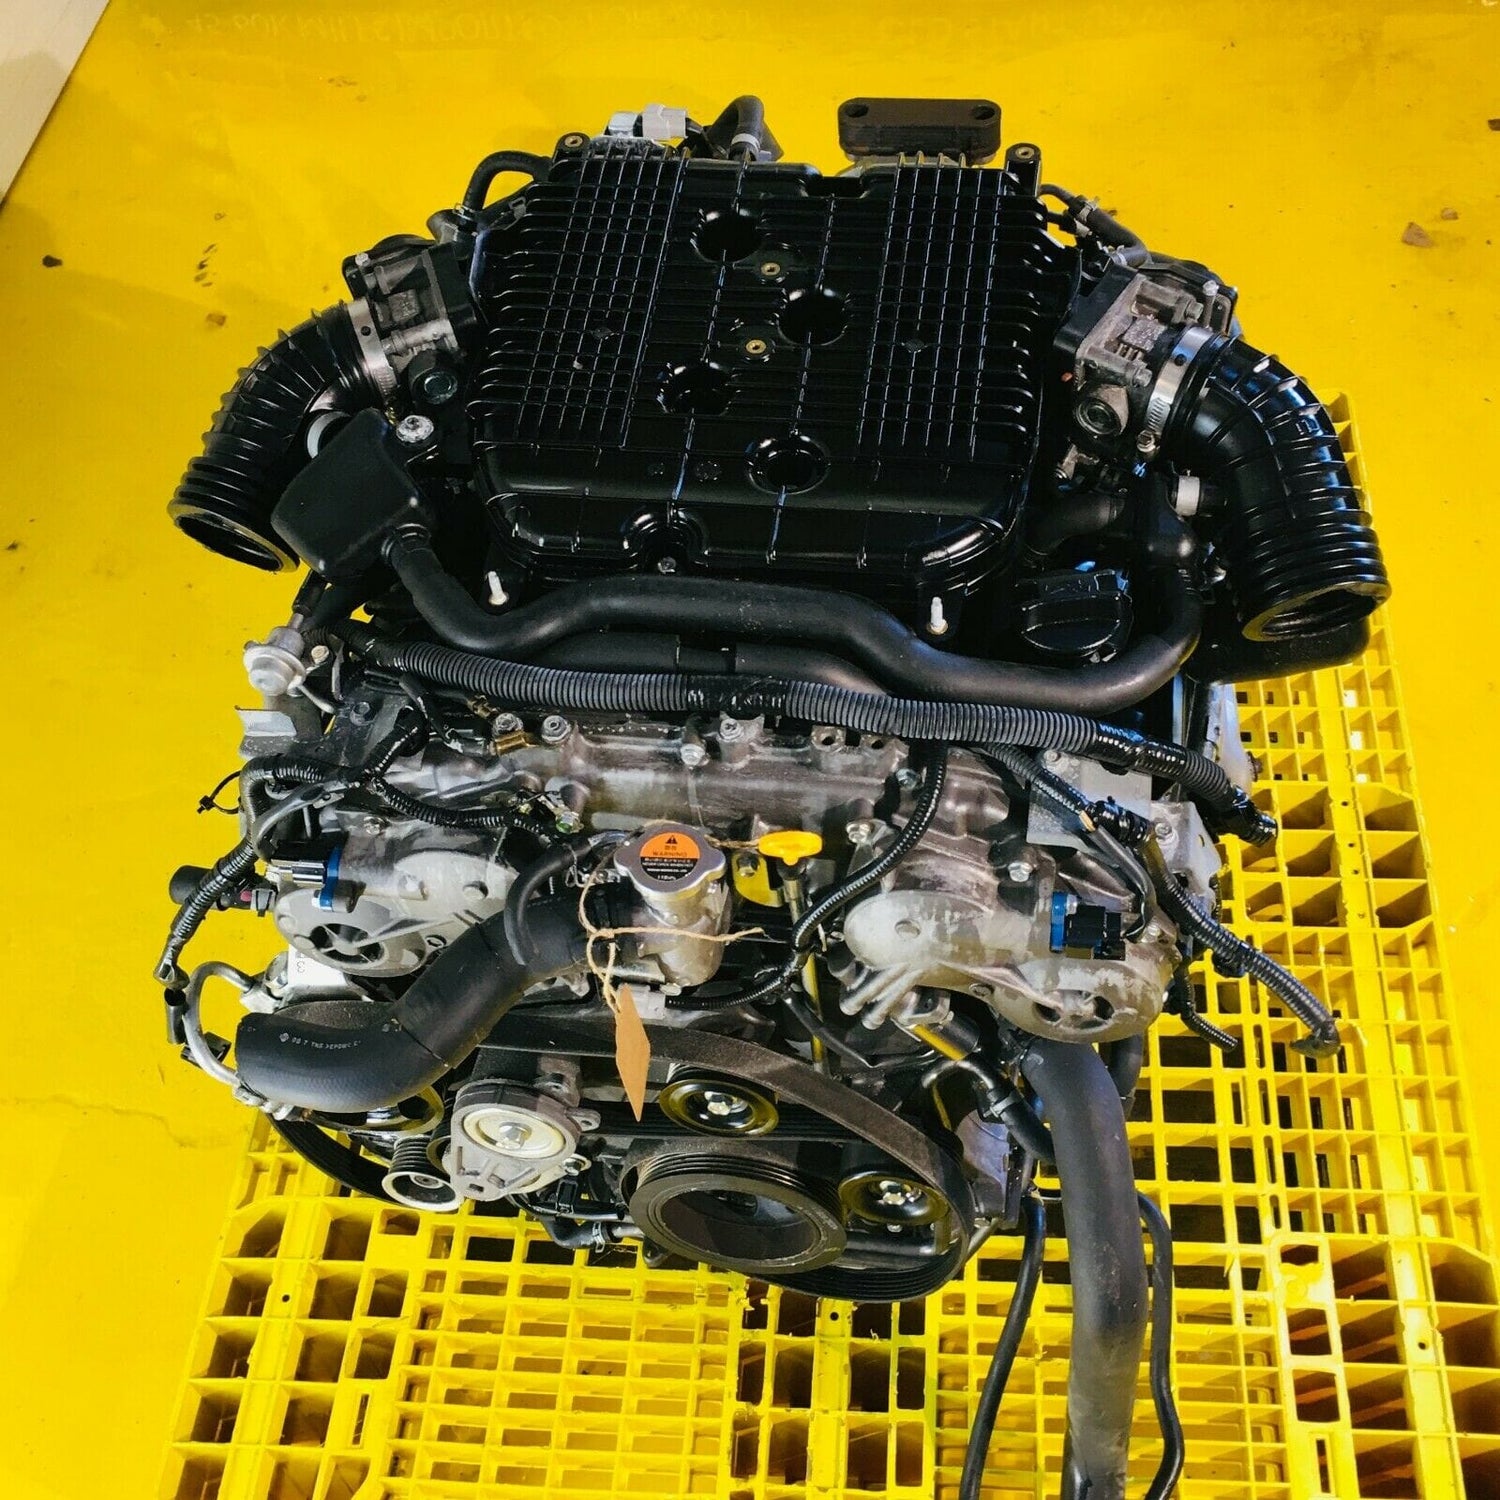 Infiniti G35 (2007-2008) 2.5L V6 JDM Replacement Engine For 3.5L VQ35HR VQ25HR